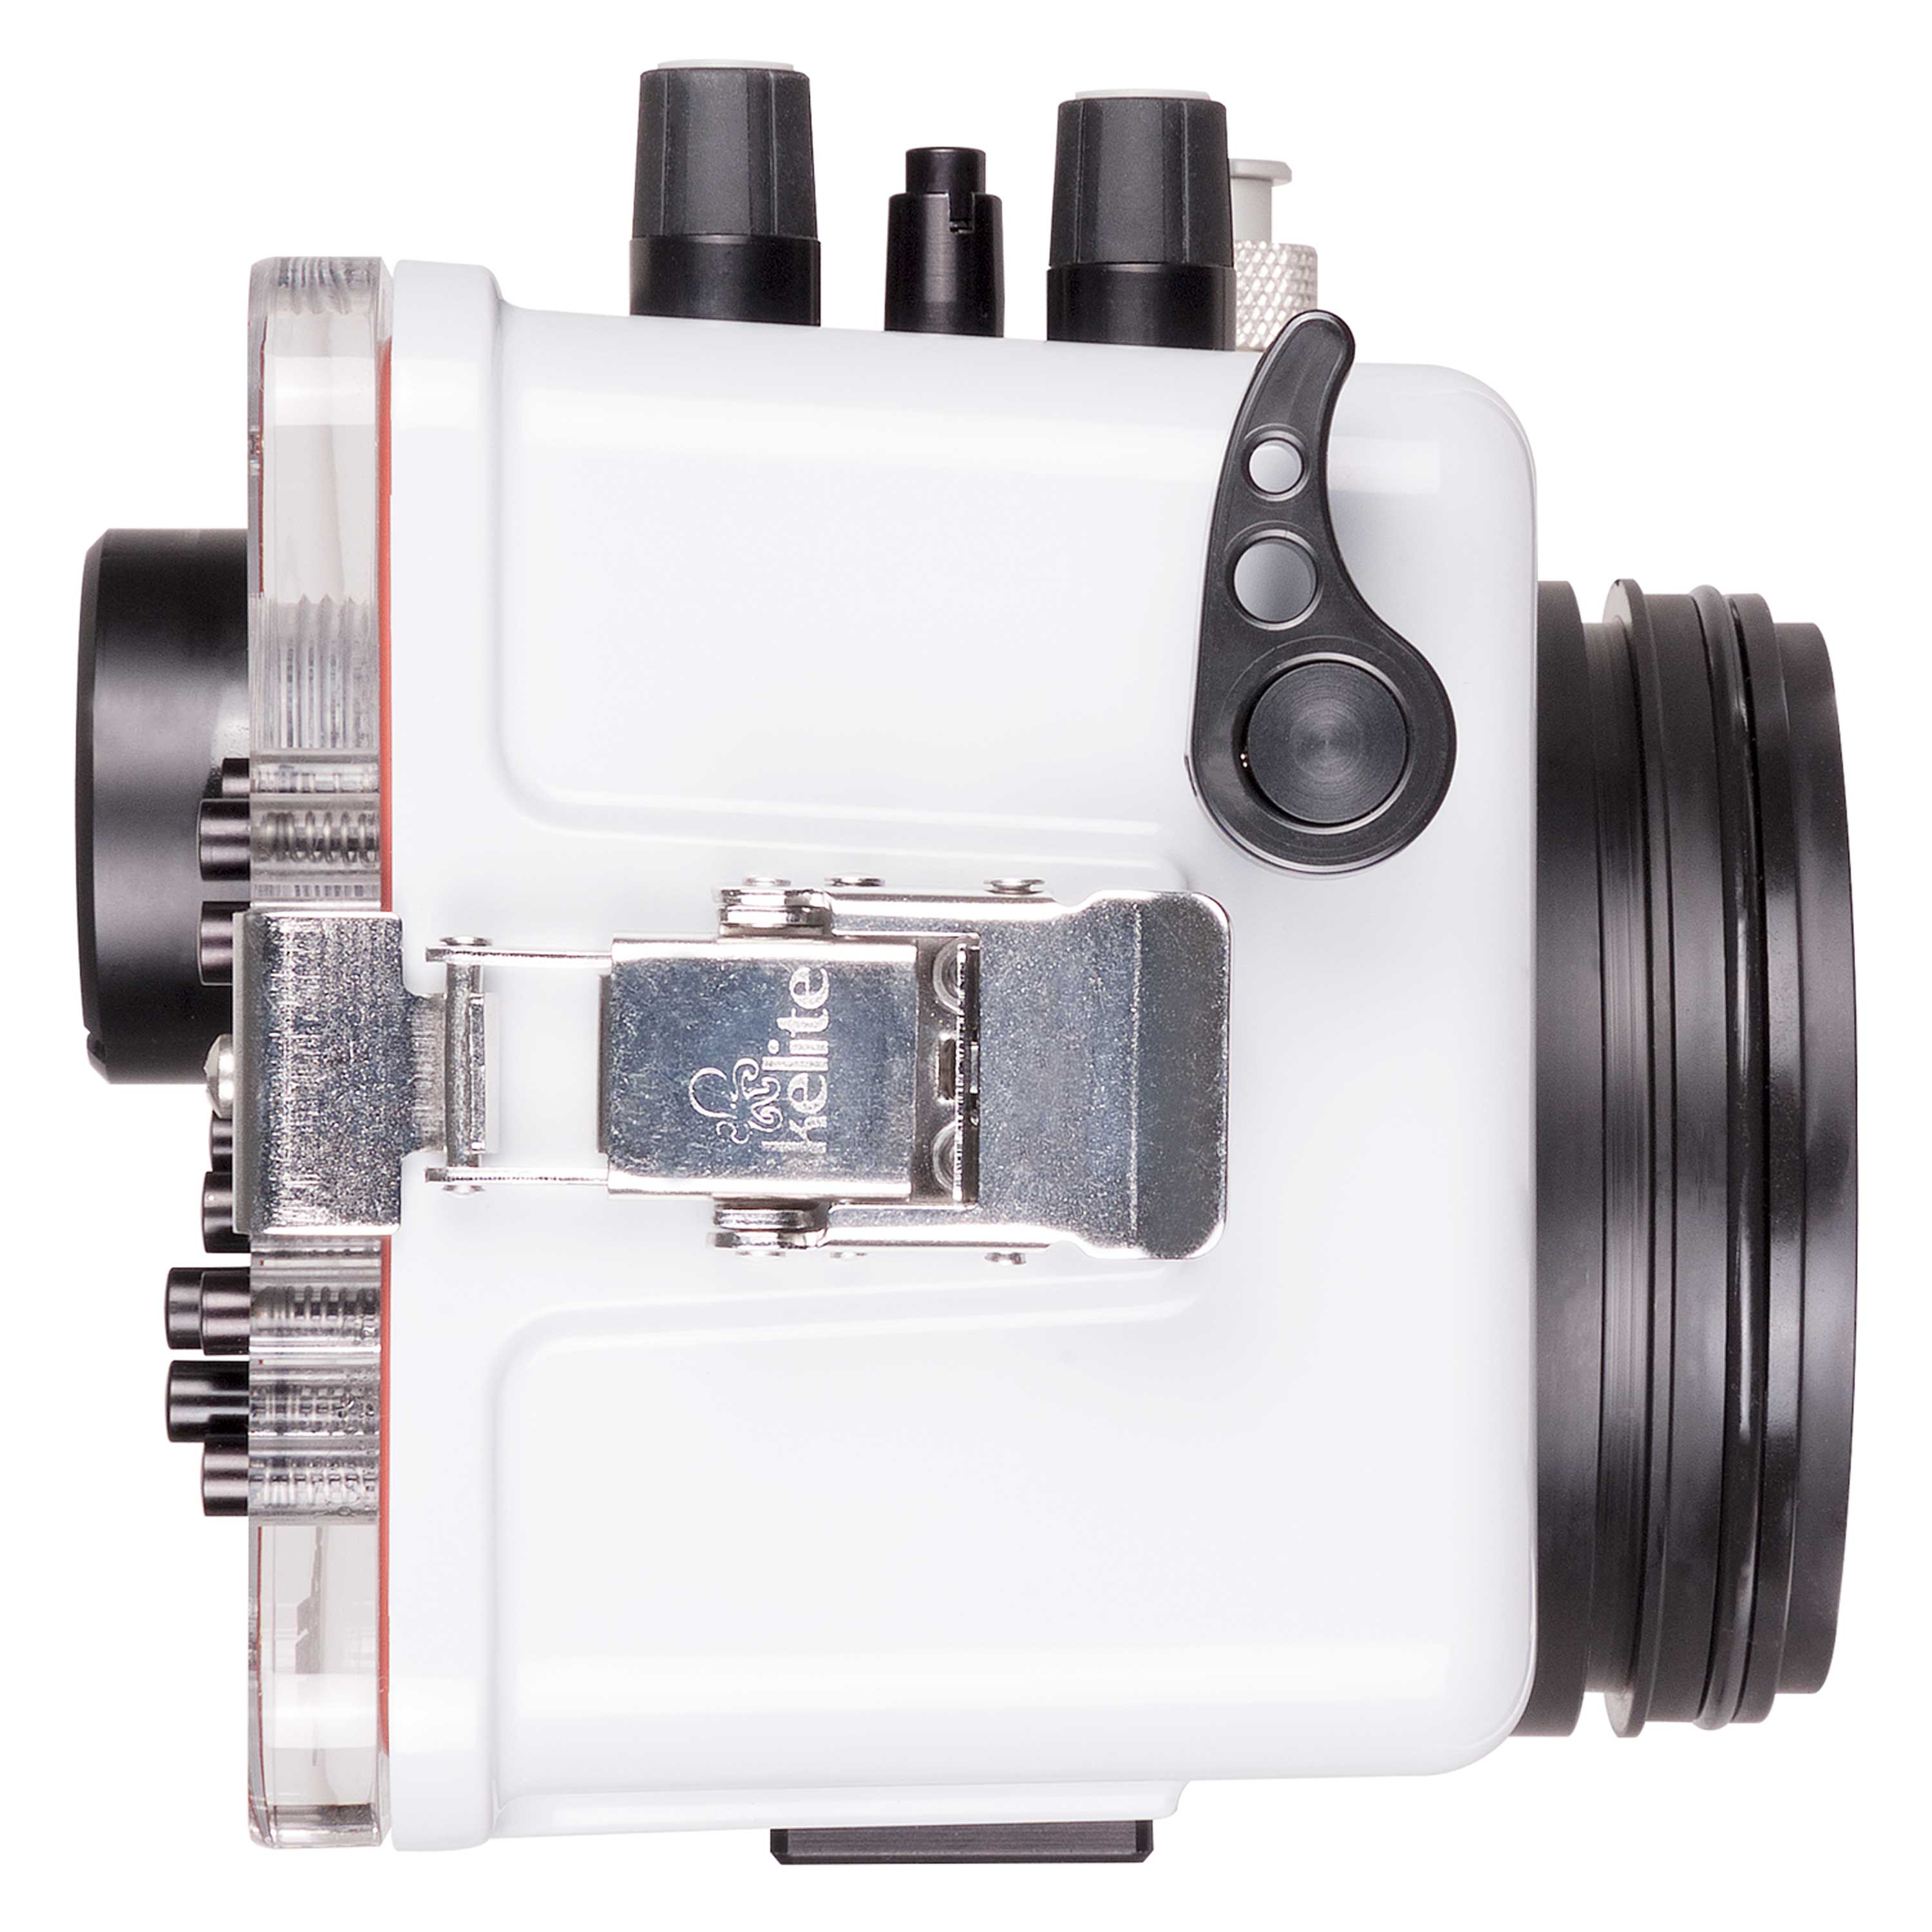 200DLM/C Underwater Housing and Canon Rebel SL2 Camera Kit